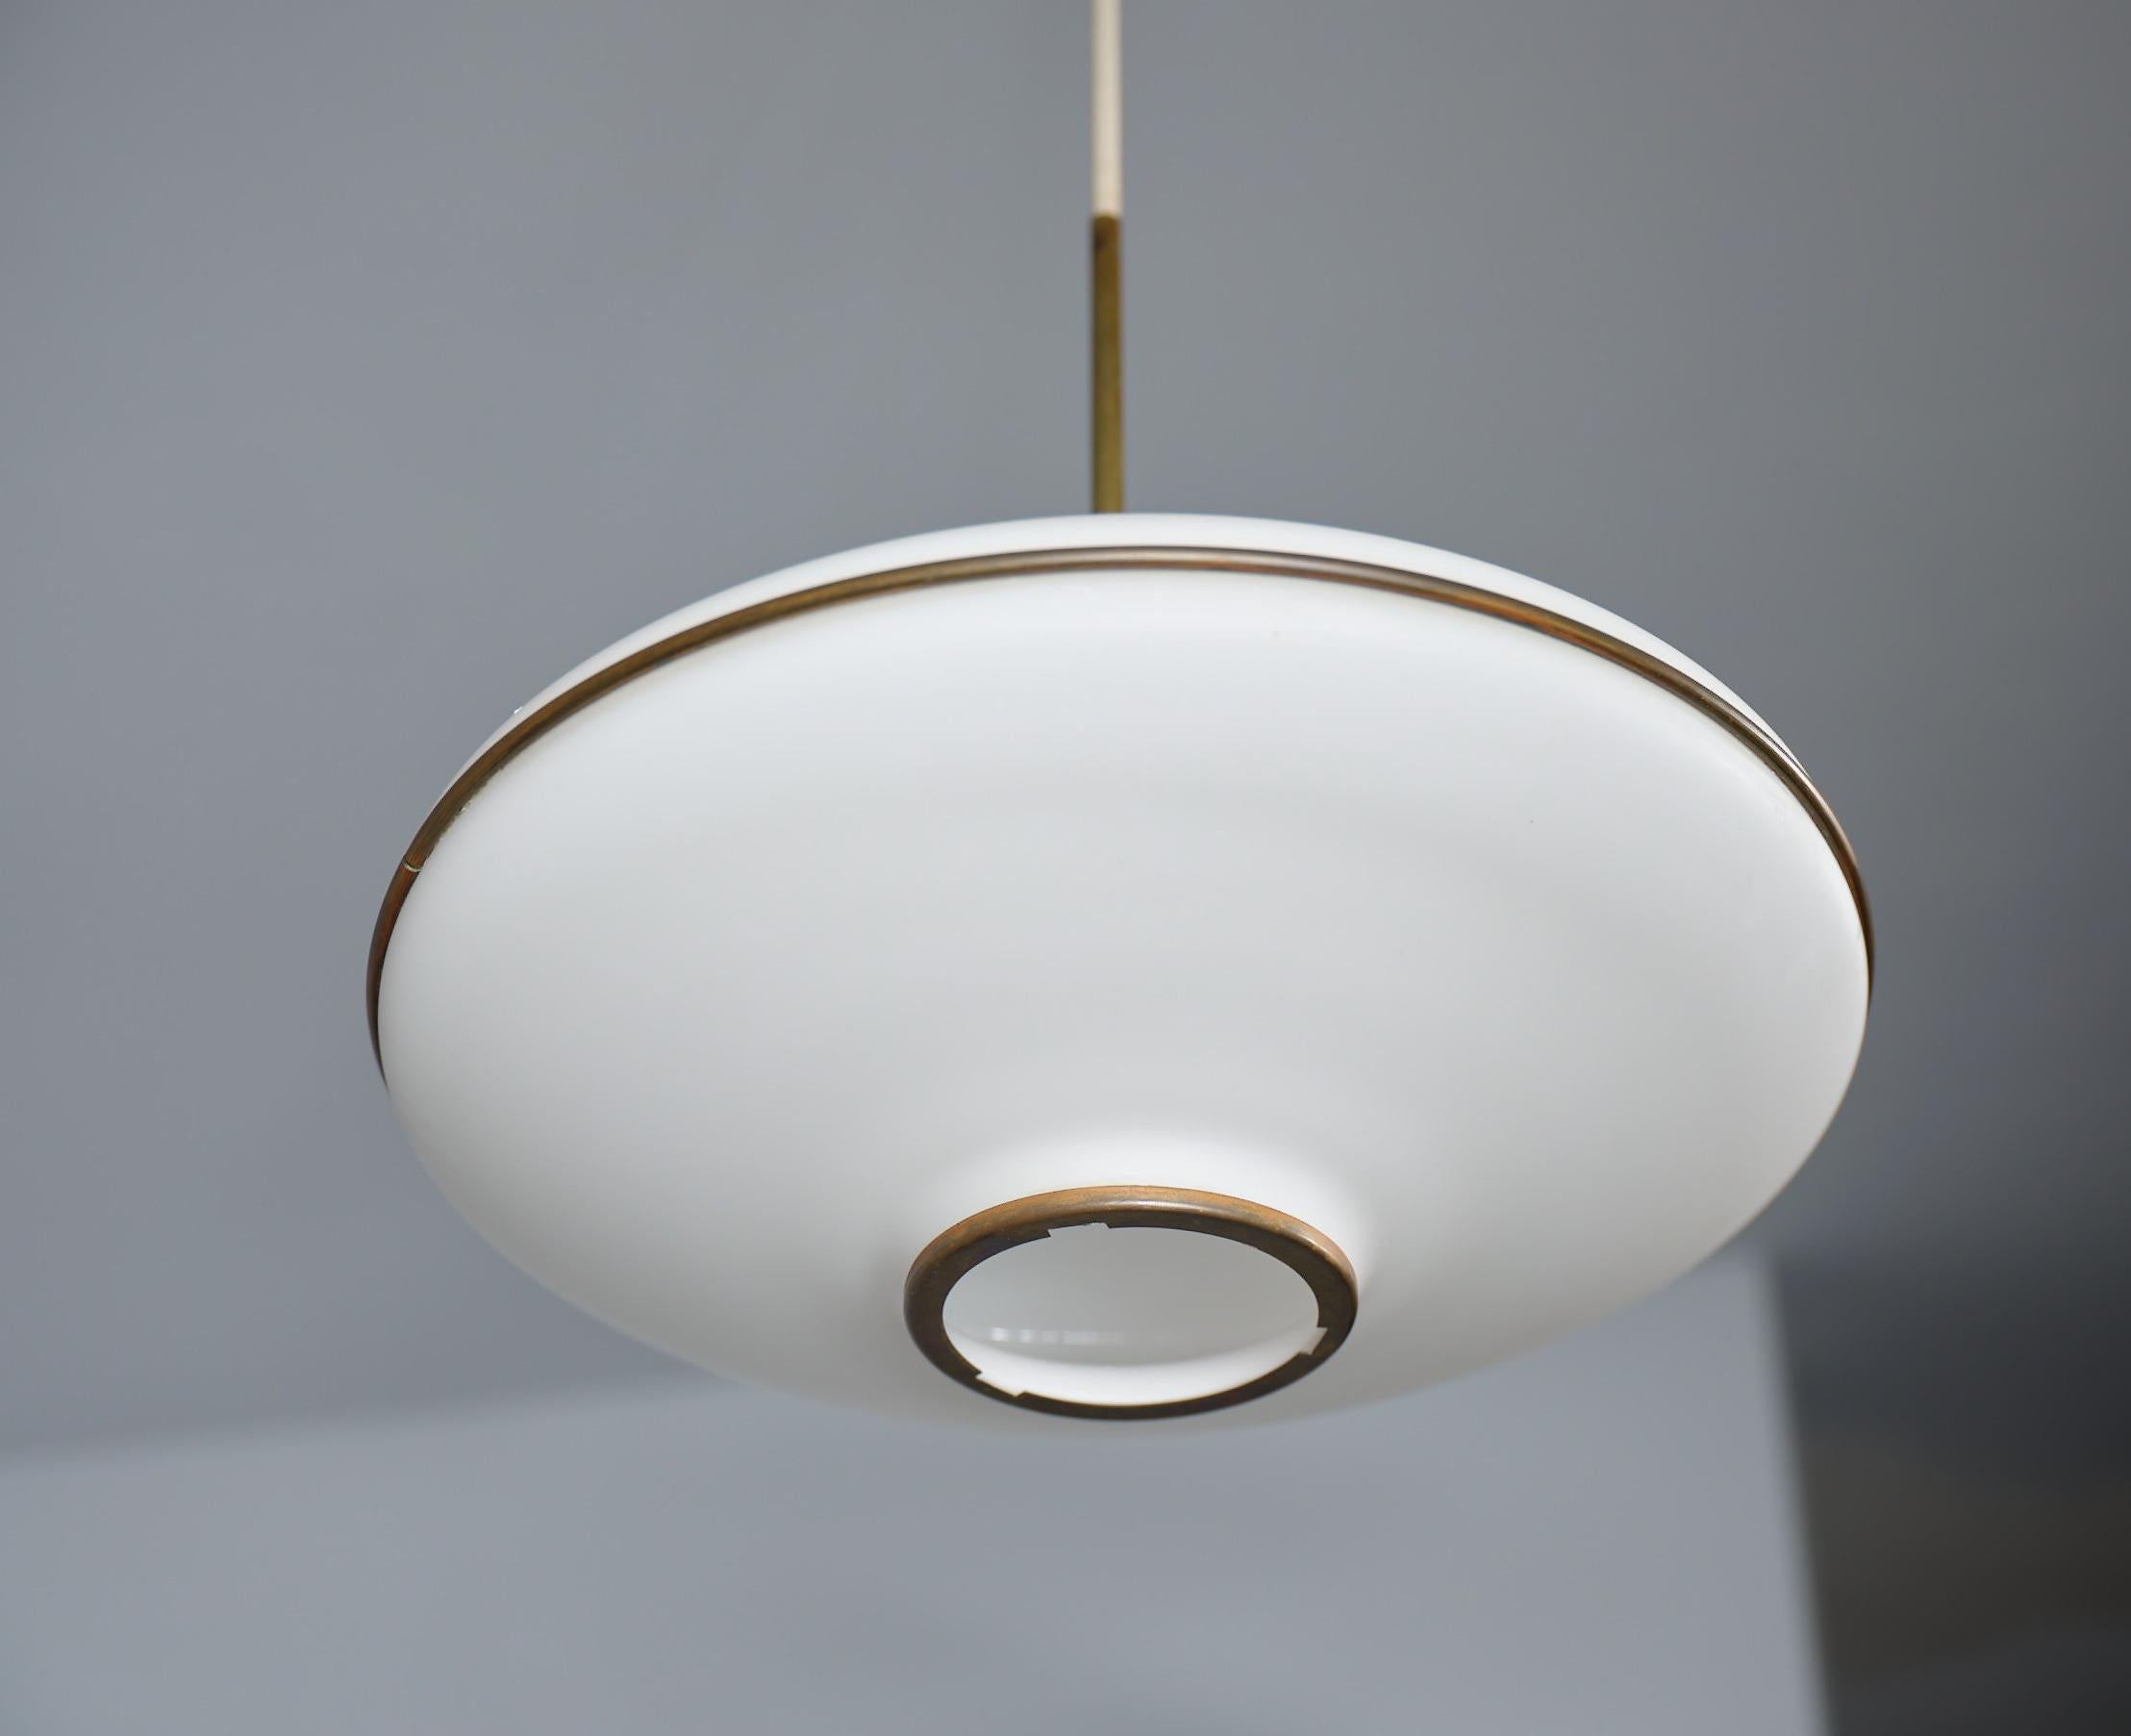 Mid-20th Century Italian Flying Saucer Pendant Lamp - Vintage 1950s Modernist Ceiling Light For Sale